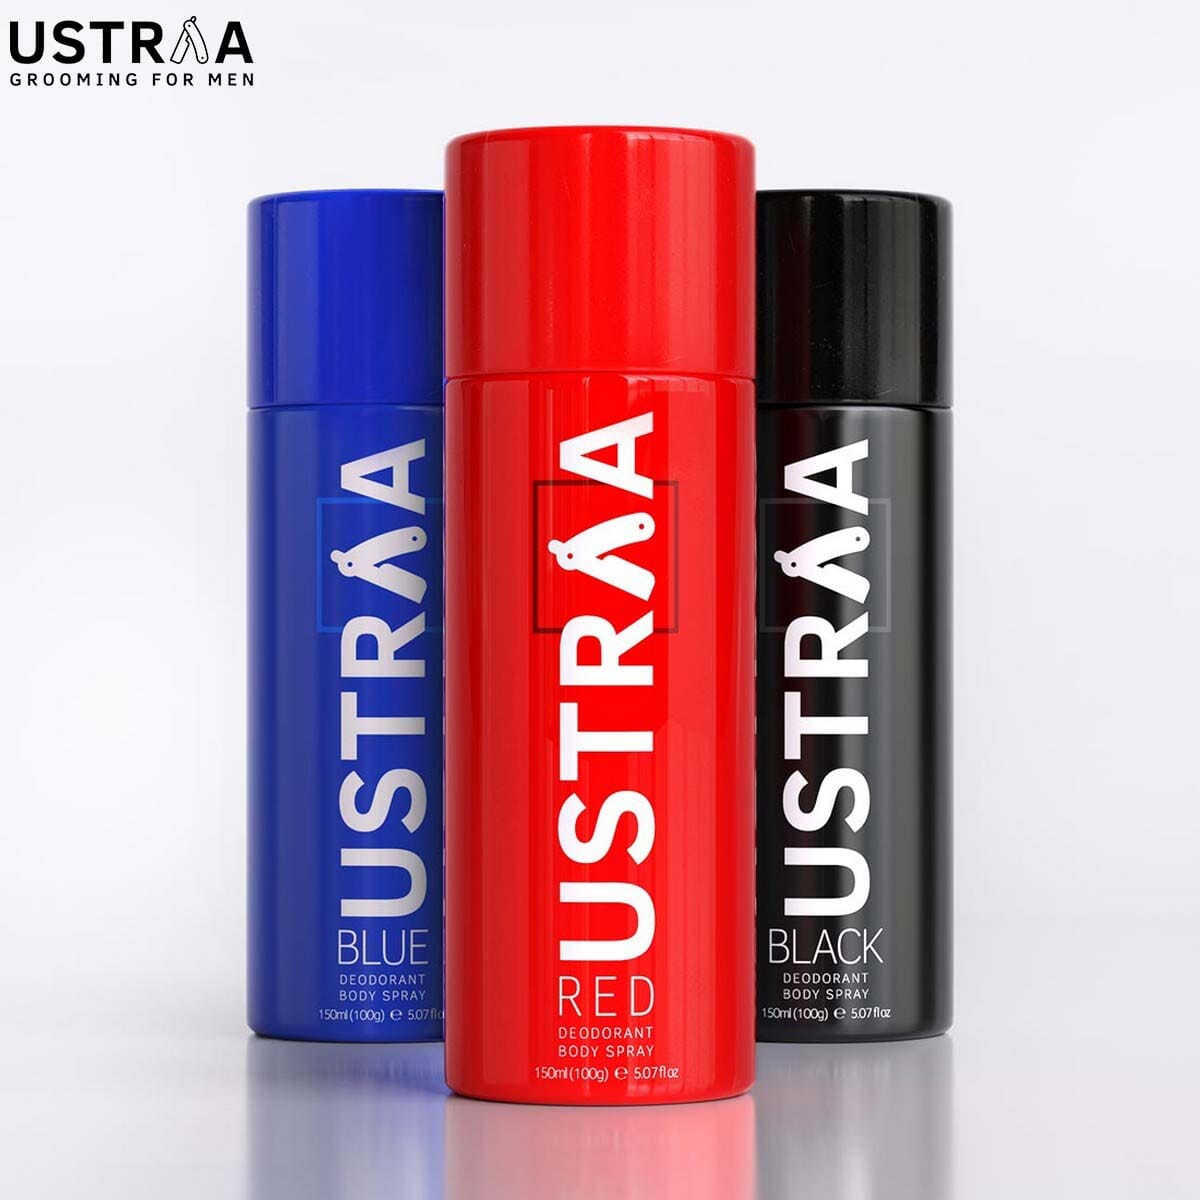 Deodorant Body Spray - 150 ml - RED, BLACK, BLUE (Set of 3)